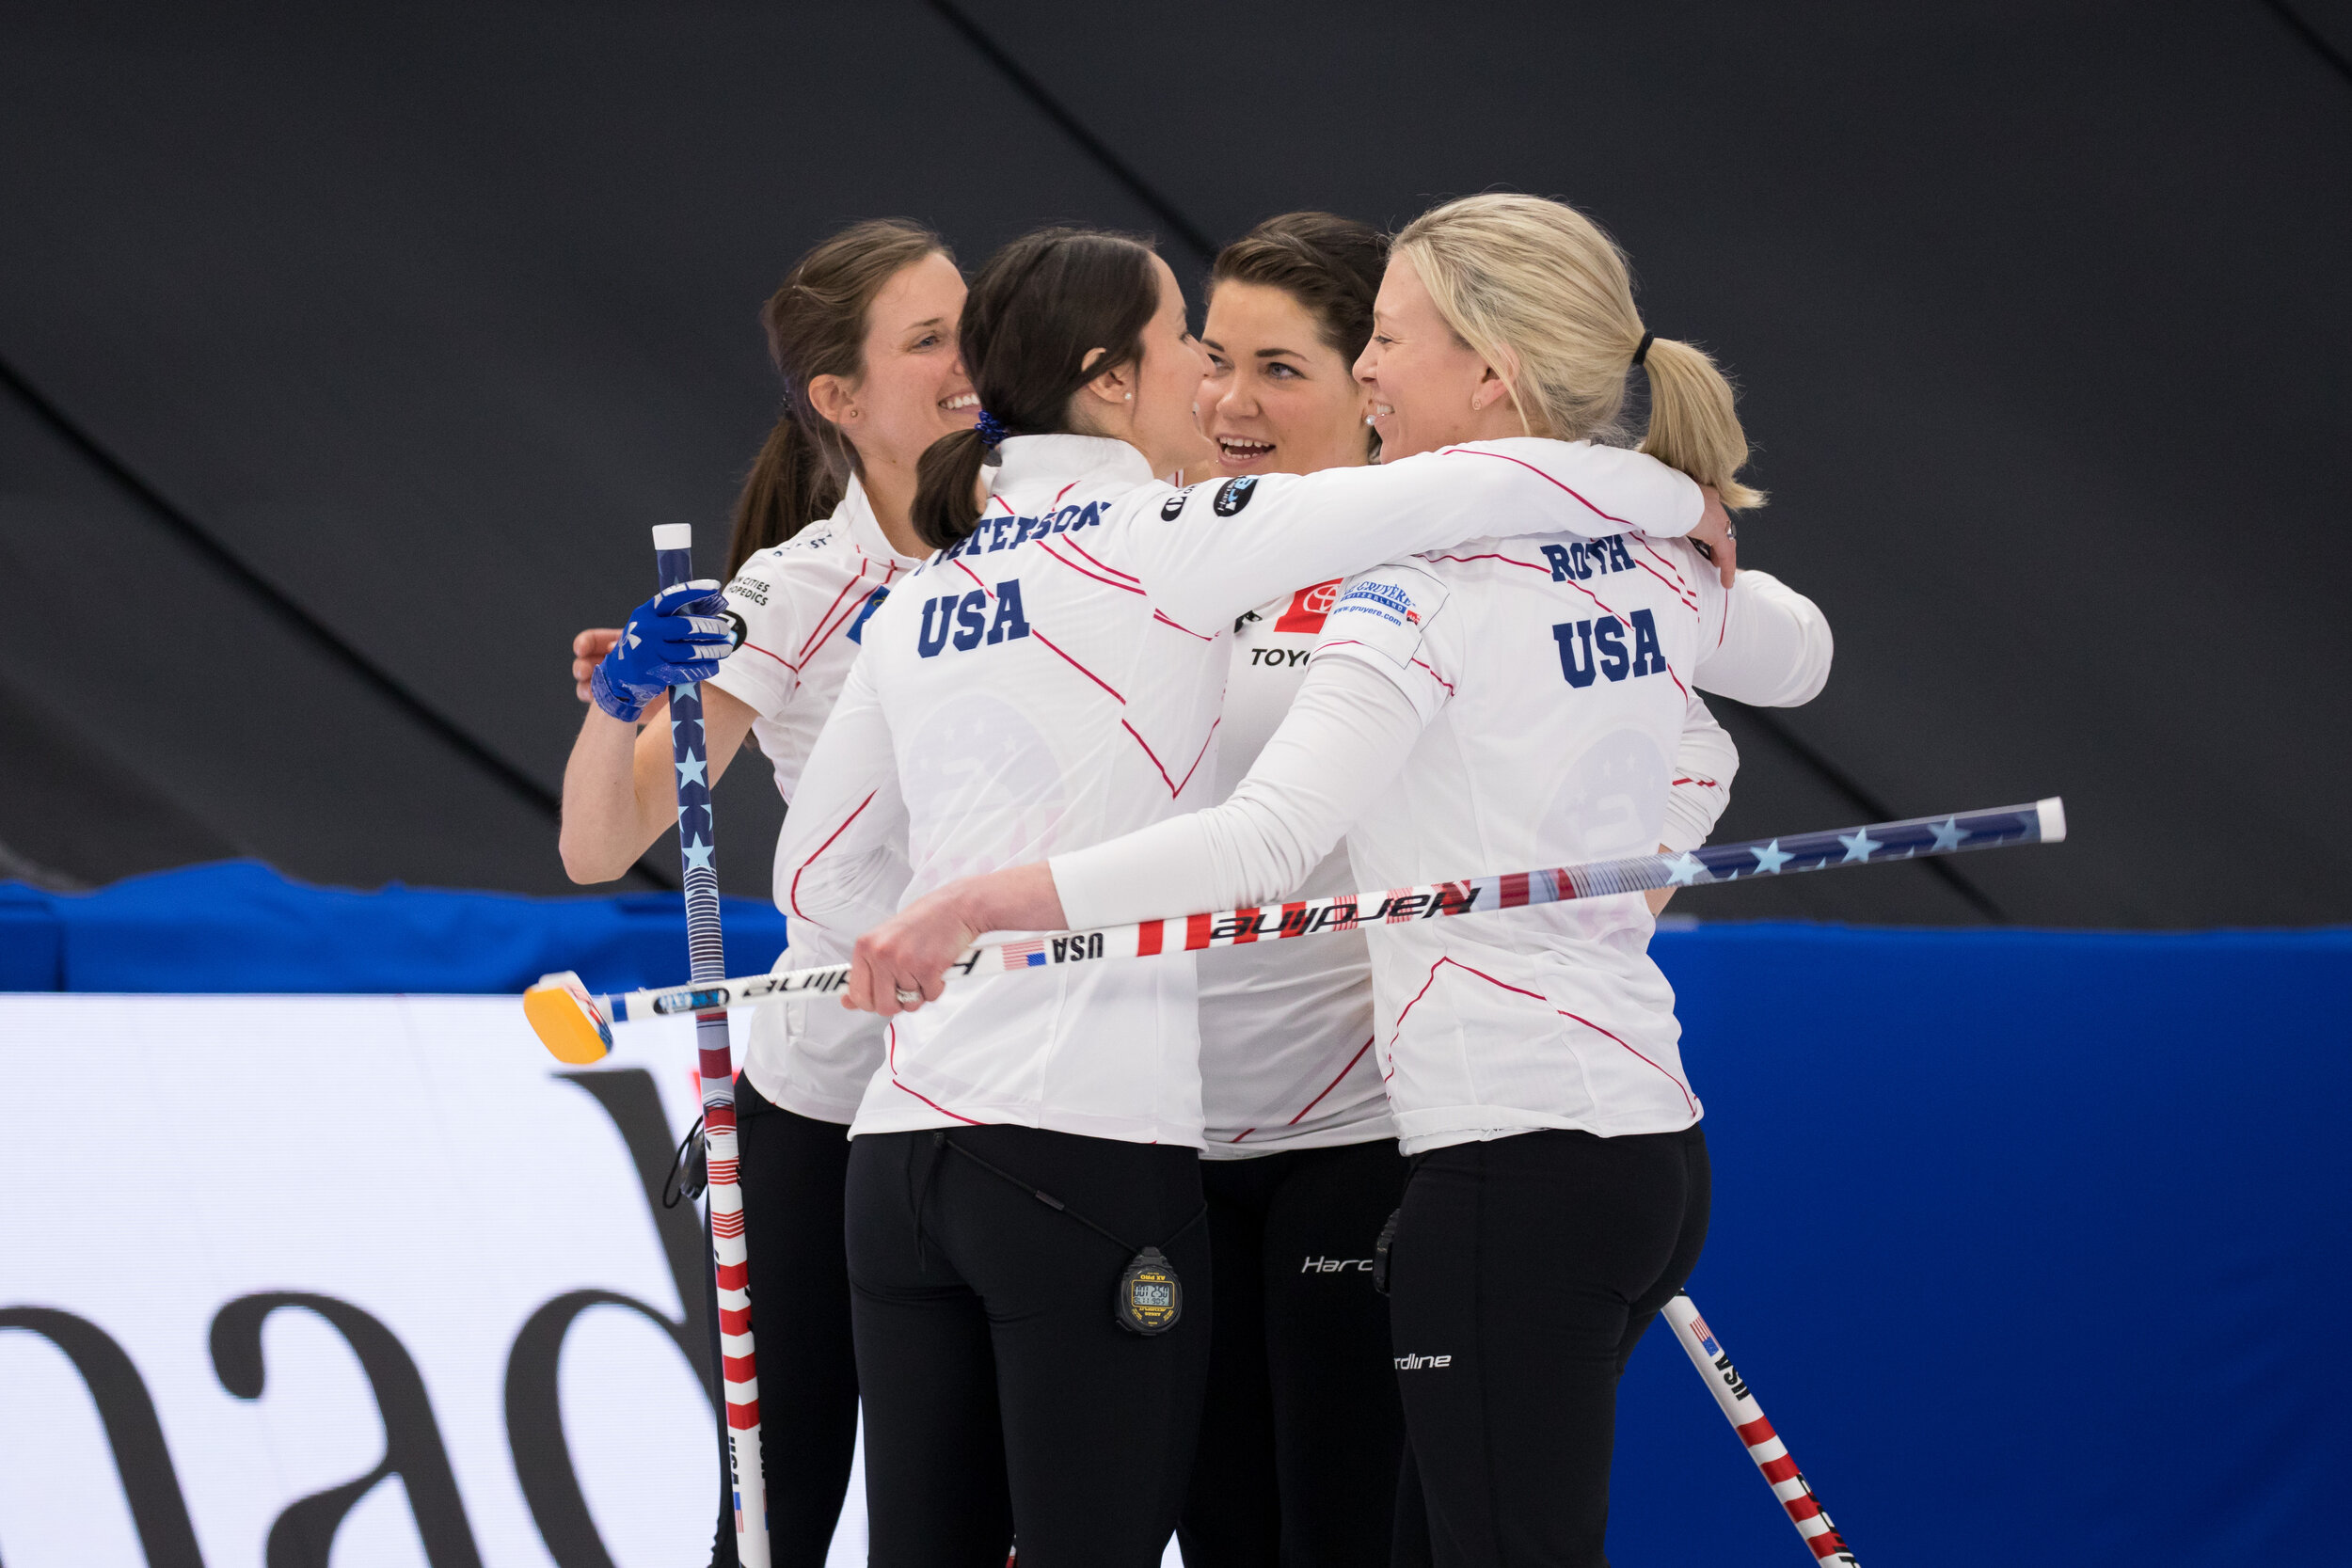 TEAM USA WINS FIRST EVER BRONZE MEDAL AT WORLD WOMEN'S CURLING